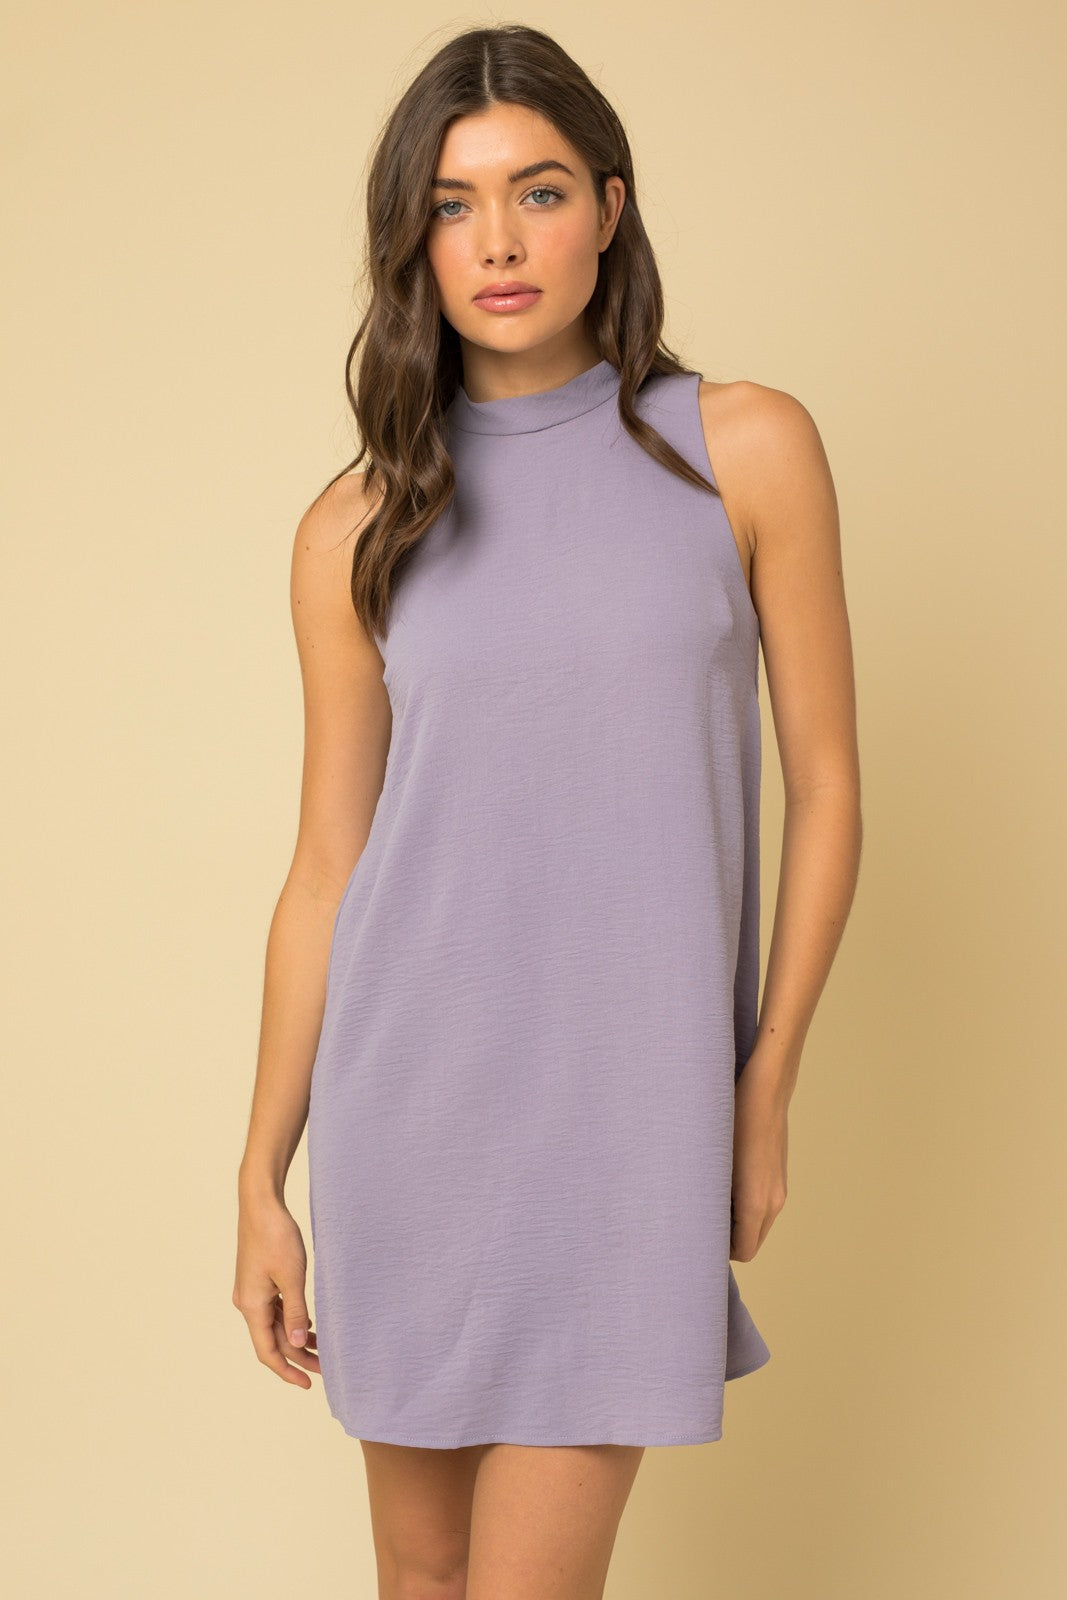 kinslee dress lavender gilli apex ethical womens boutique